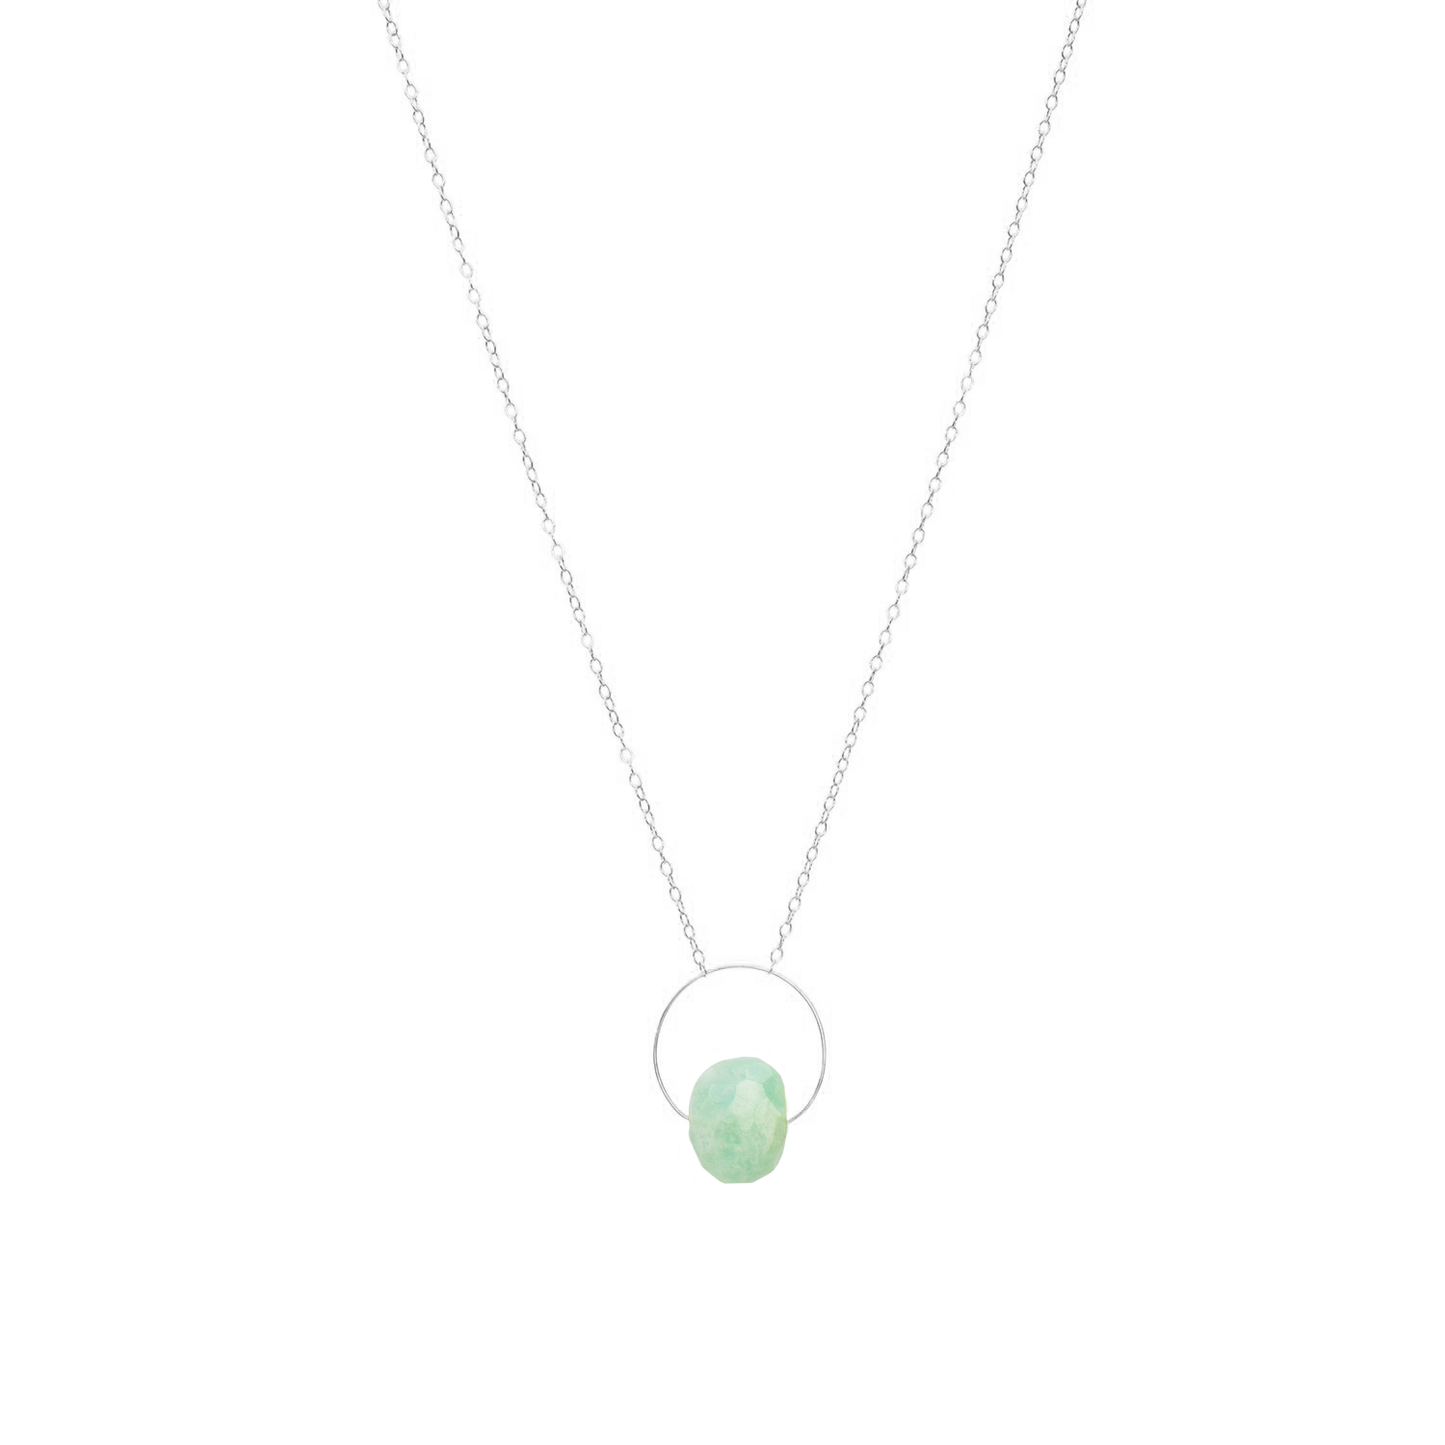 Petite Circle Pendant Necklace with hand-cut precious gem options